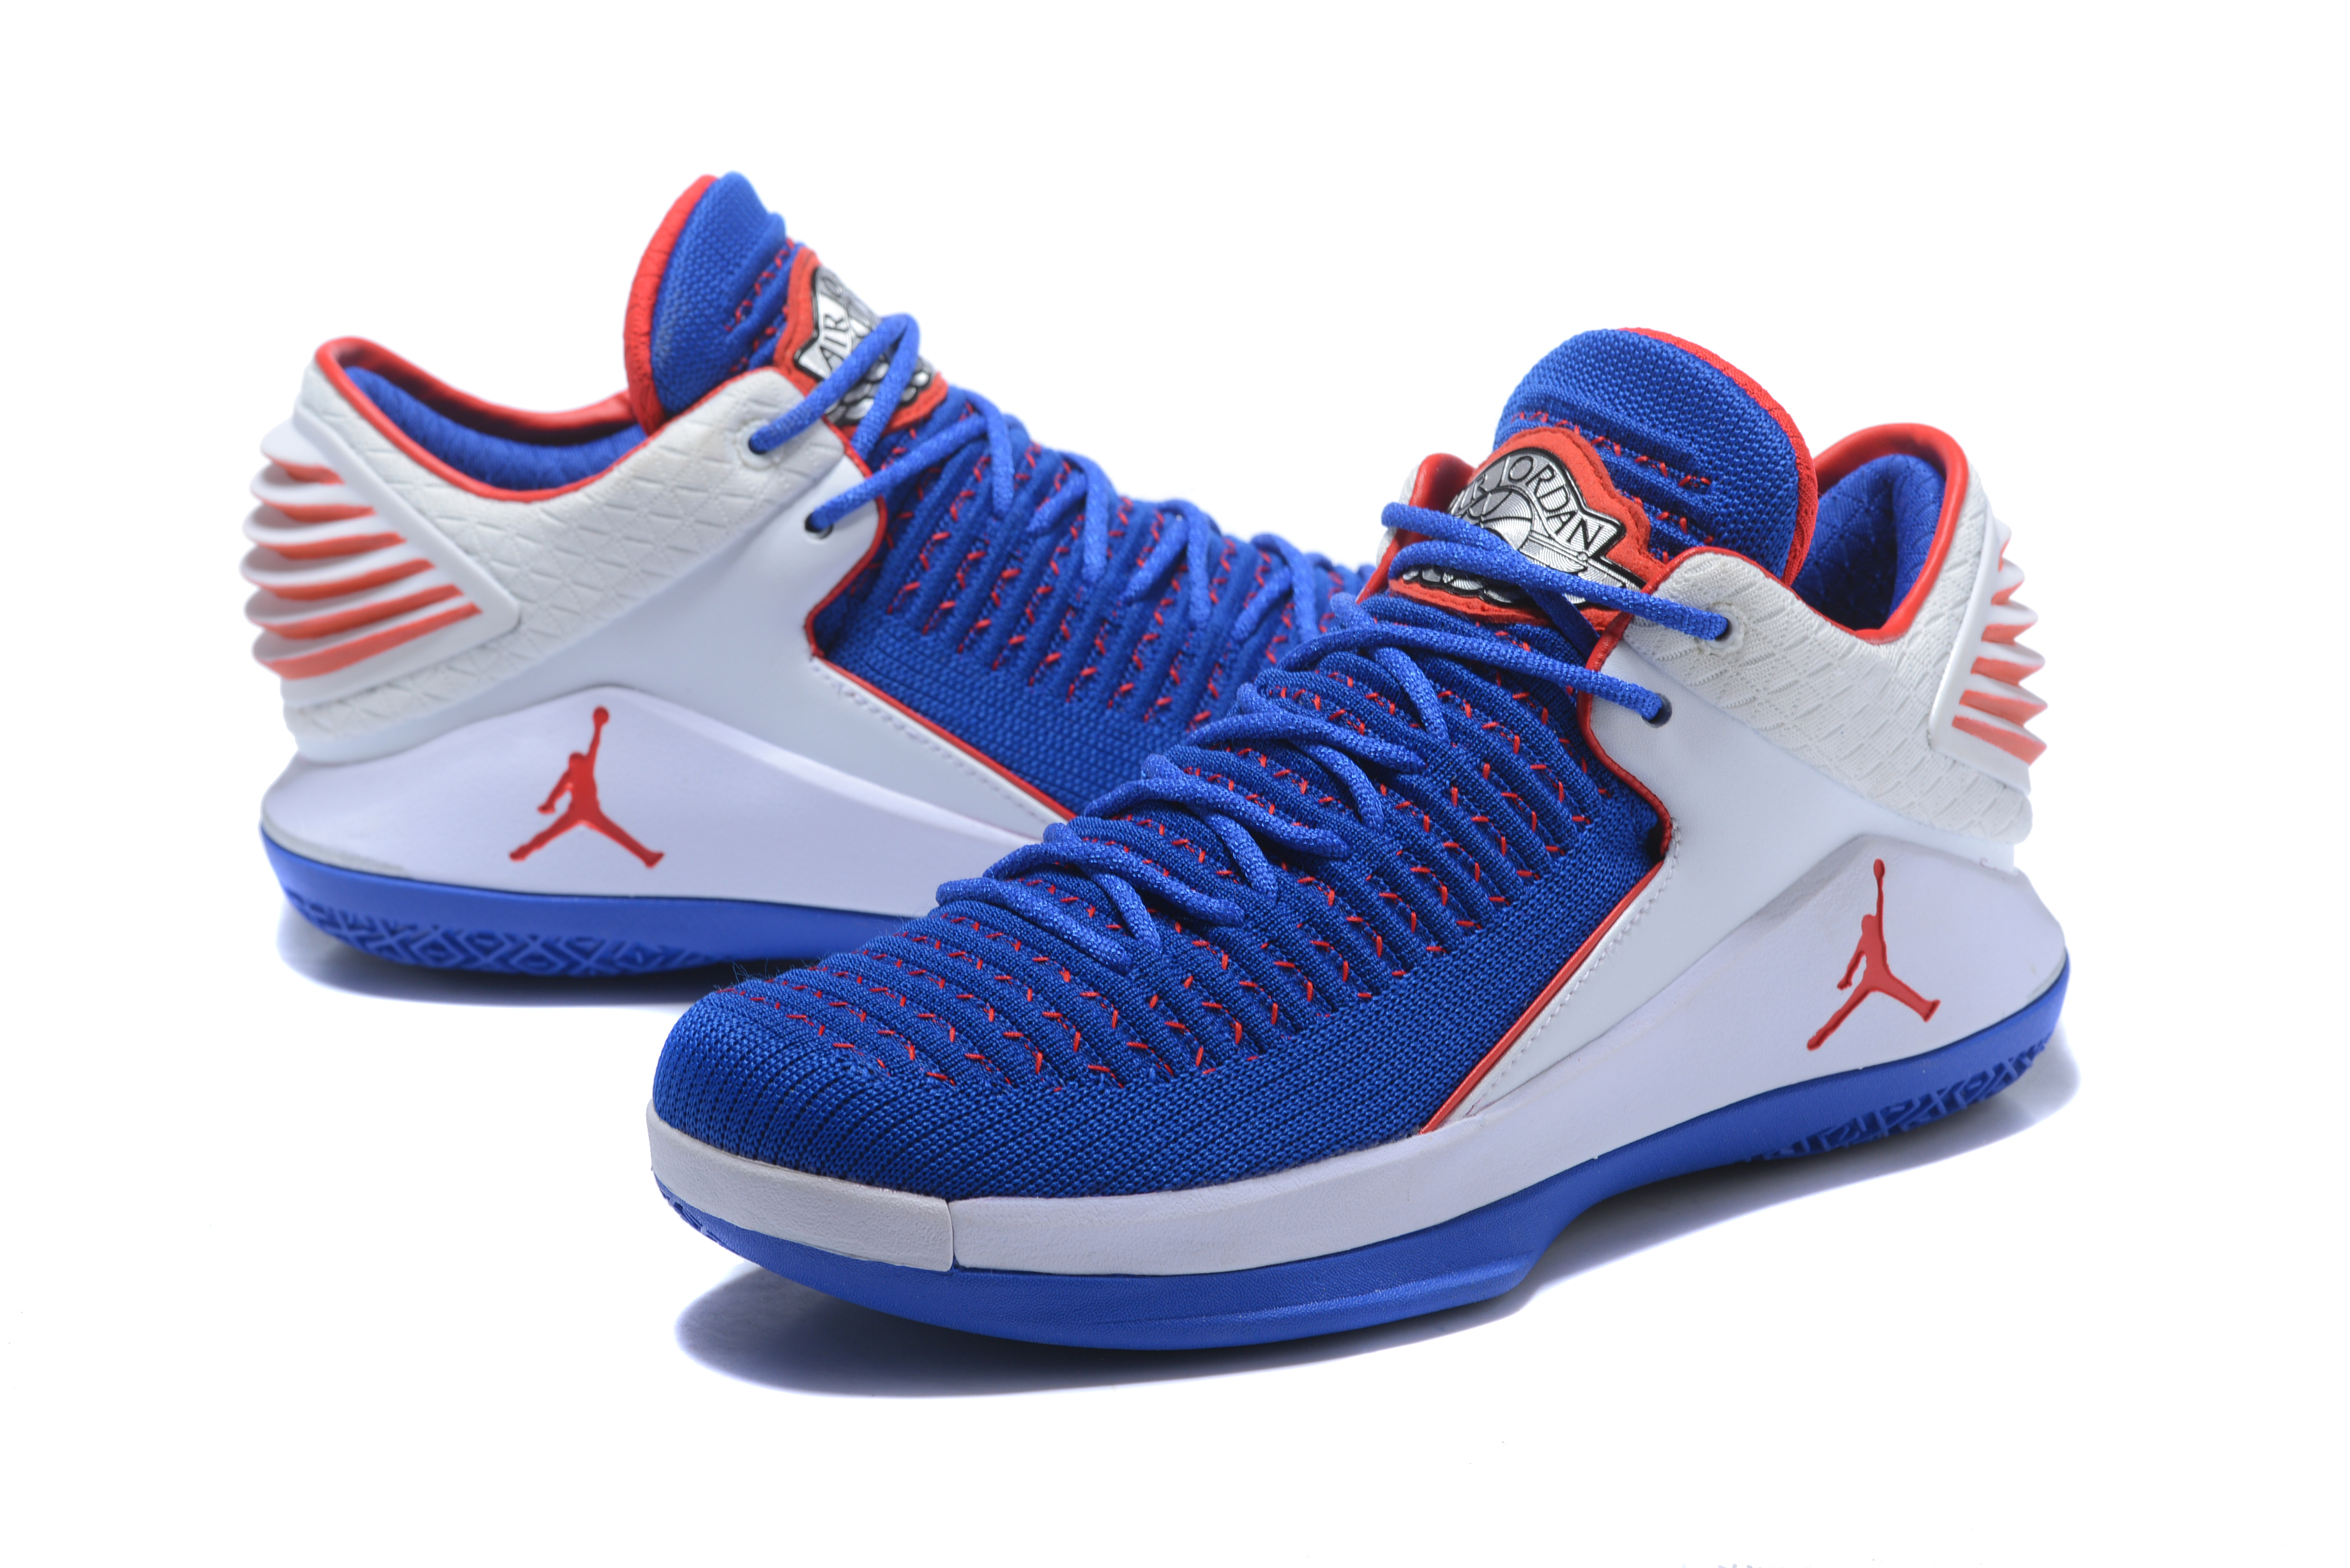 New Air Jordan 32 Pistons Basketball Shoes